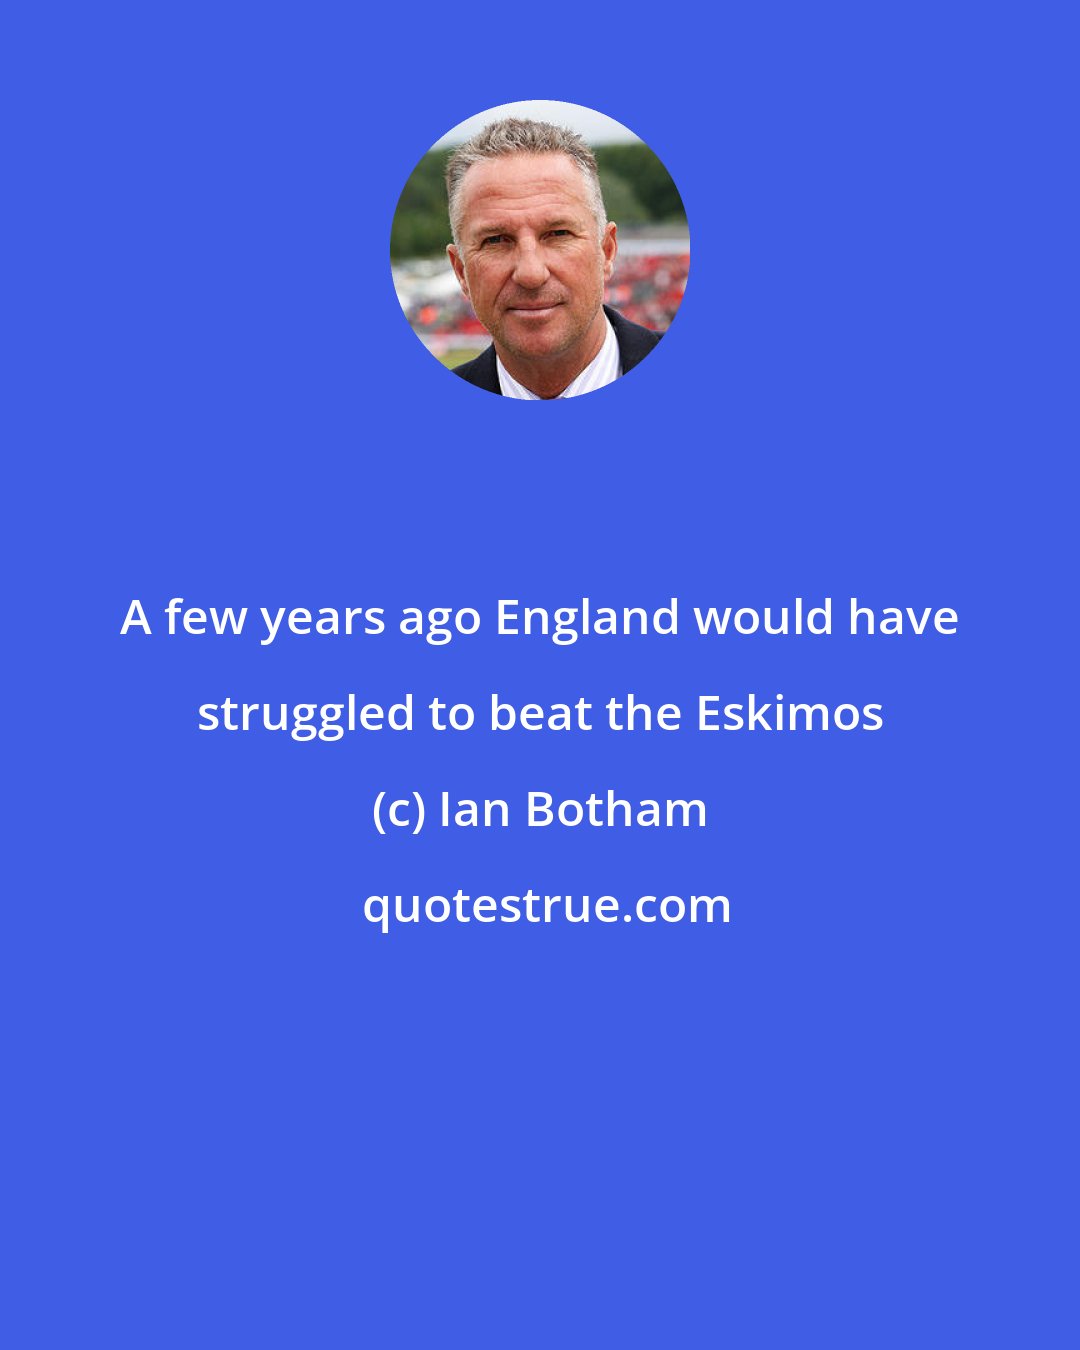 Ian Botham: A few years ago England would have struggled to beat the Eskimos